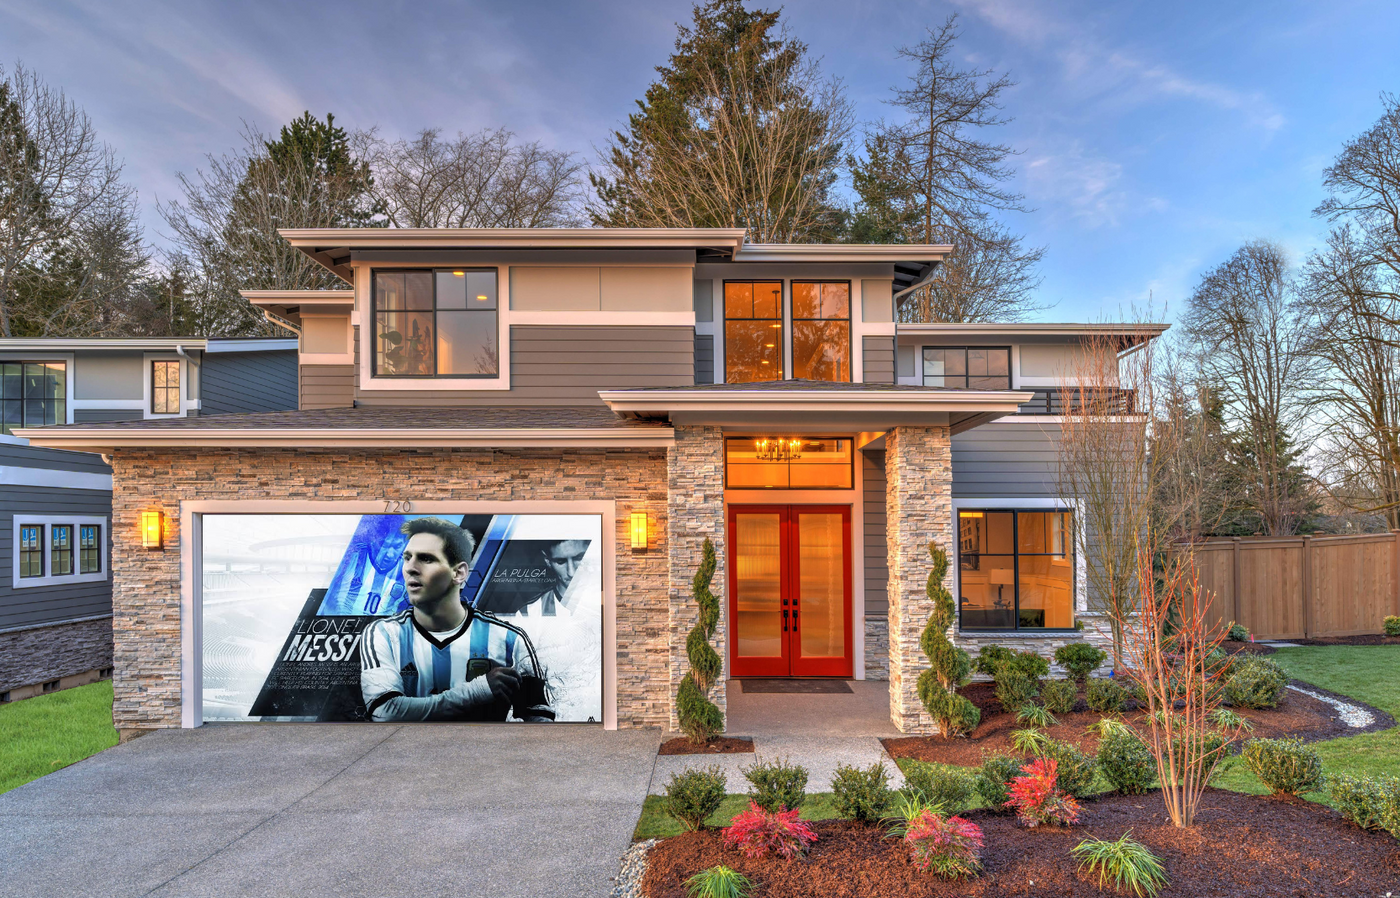 Lio Messi Collage Soccer Garage Door Cover